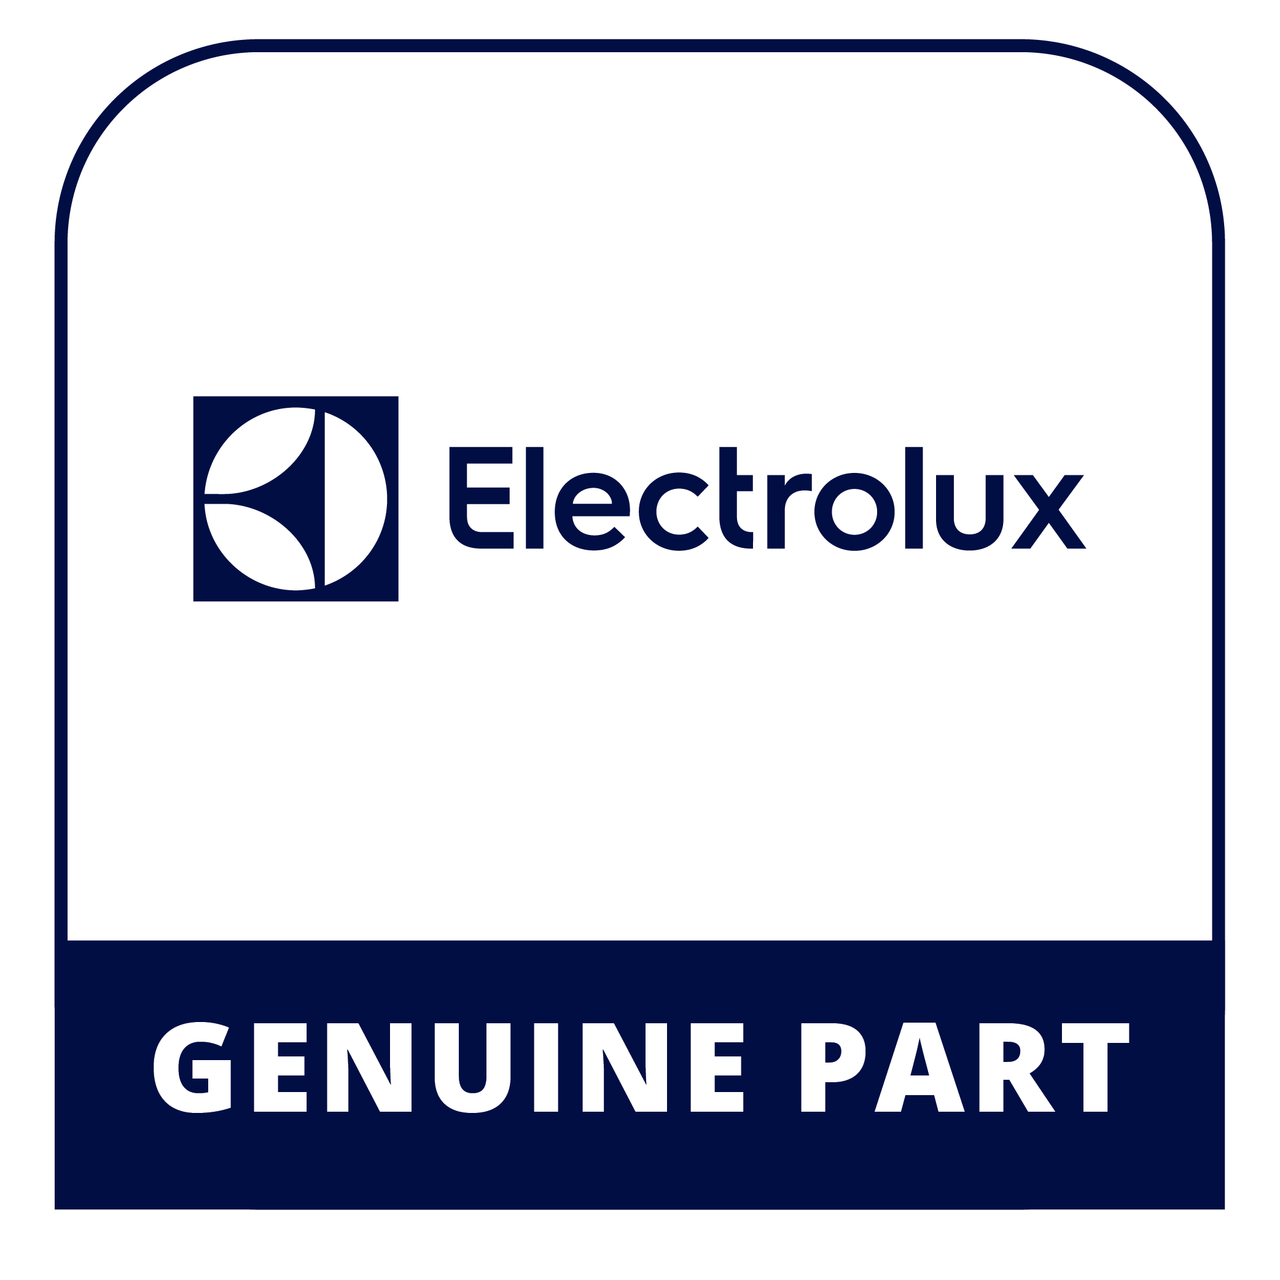 Frigidaire - Electrolux 139030902 Cover - Genuine Electrolux Part